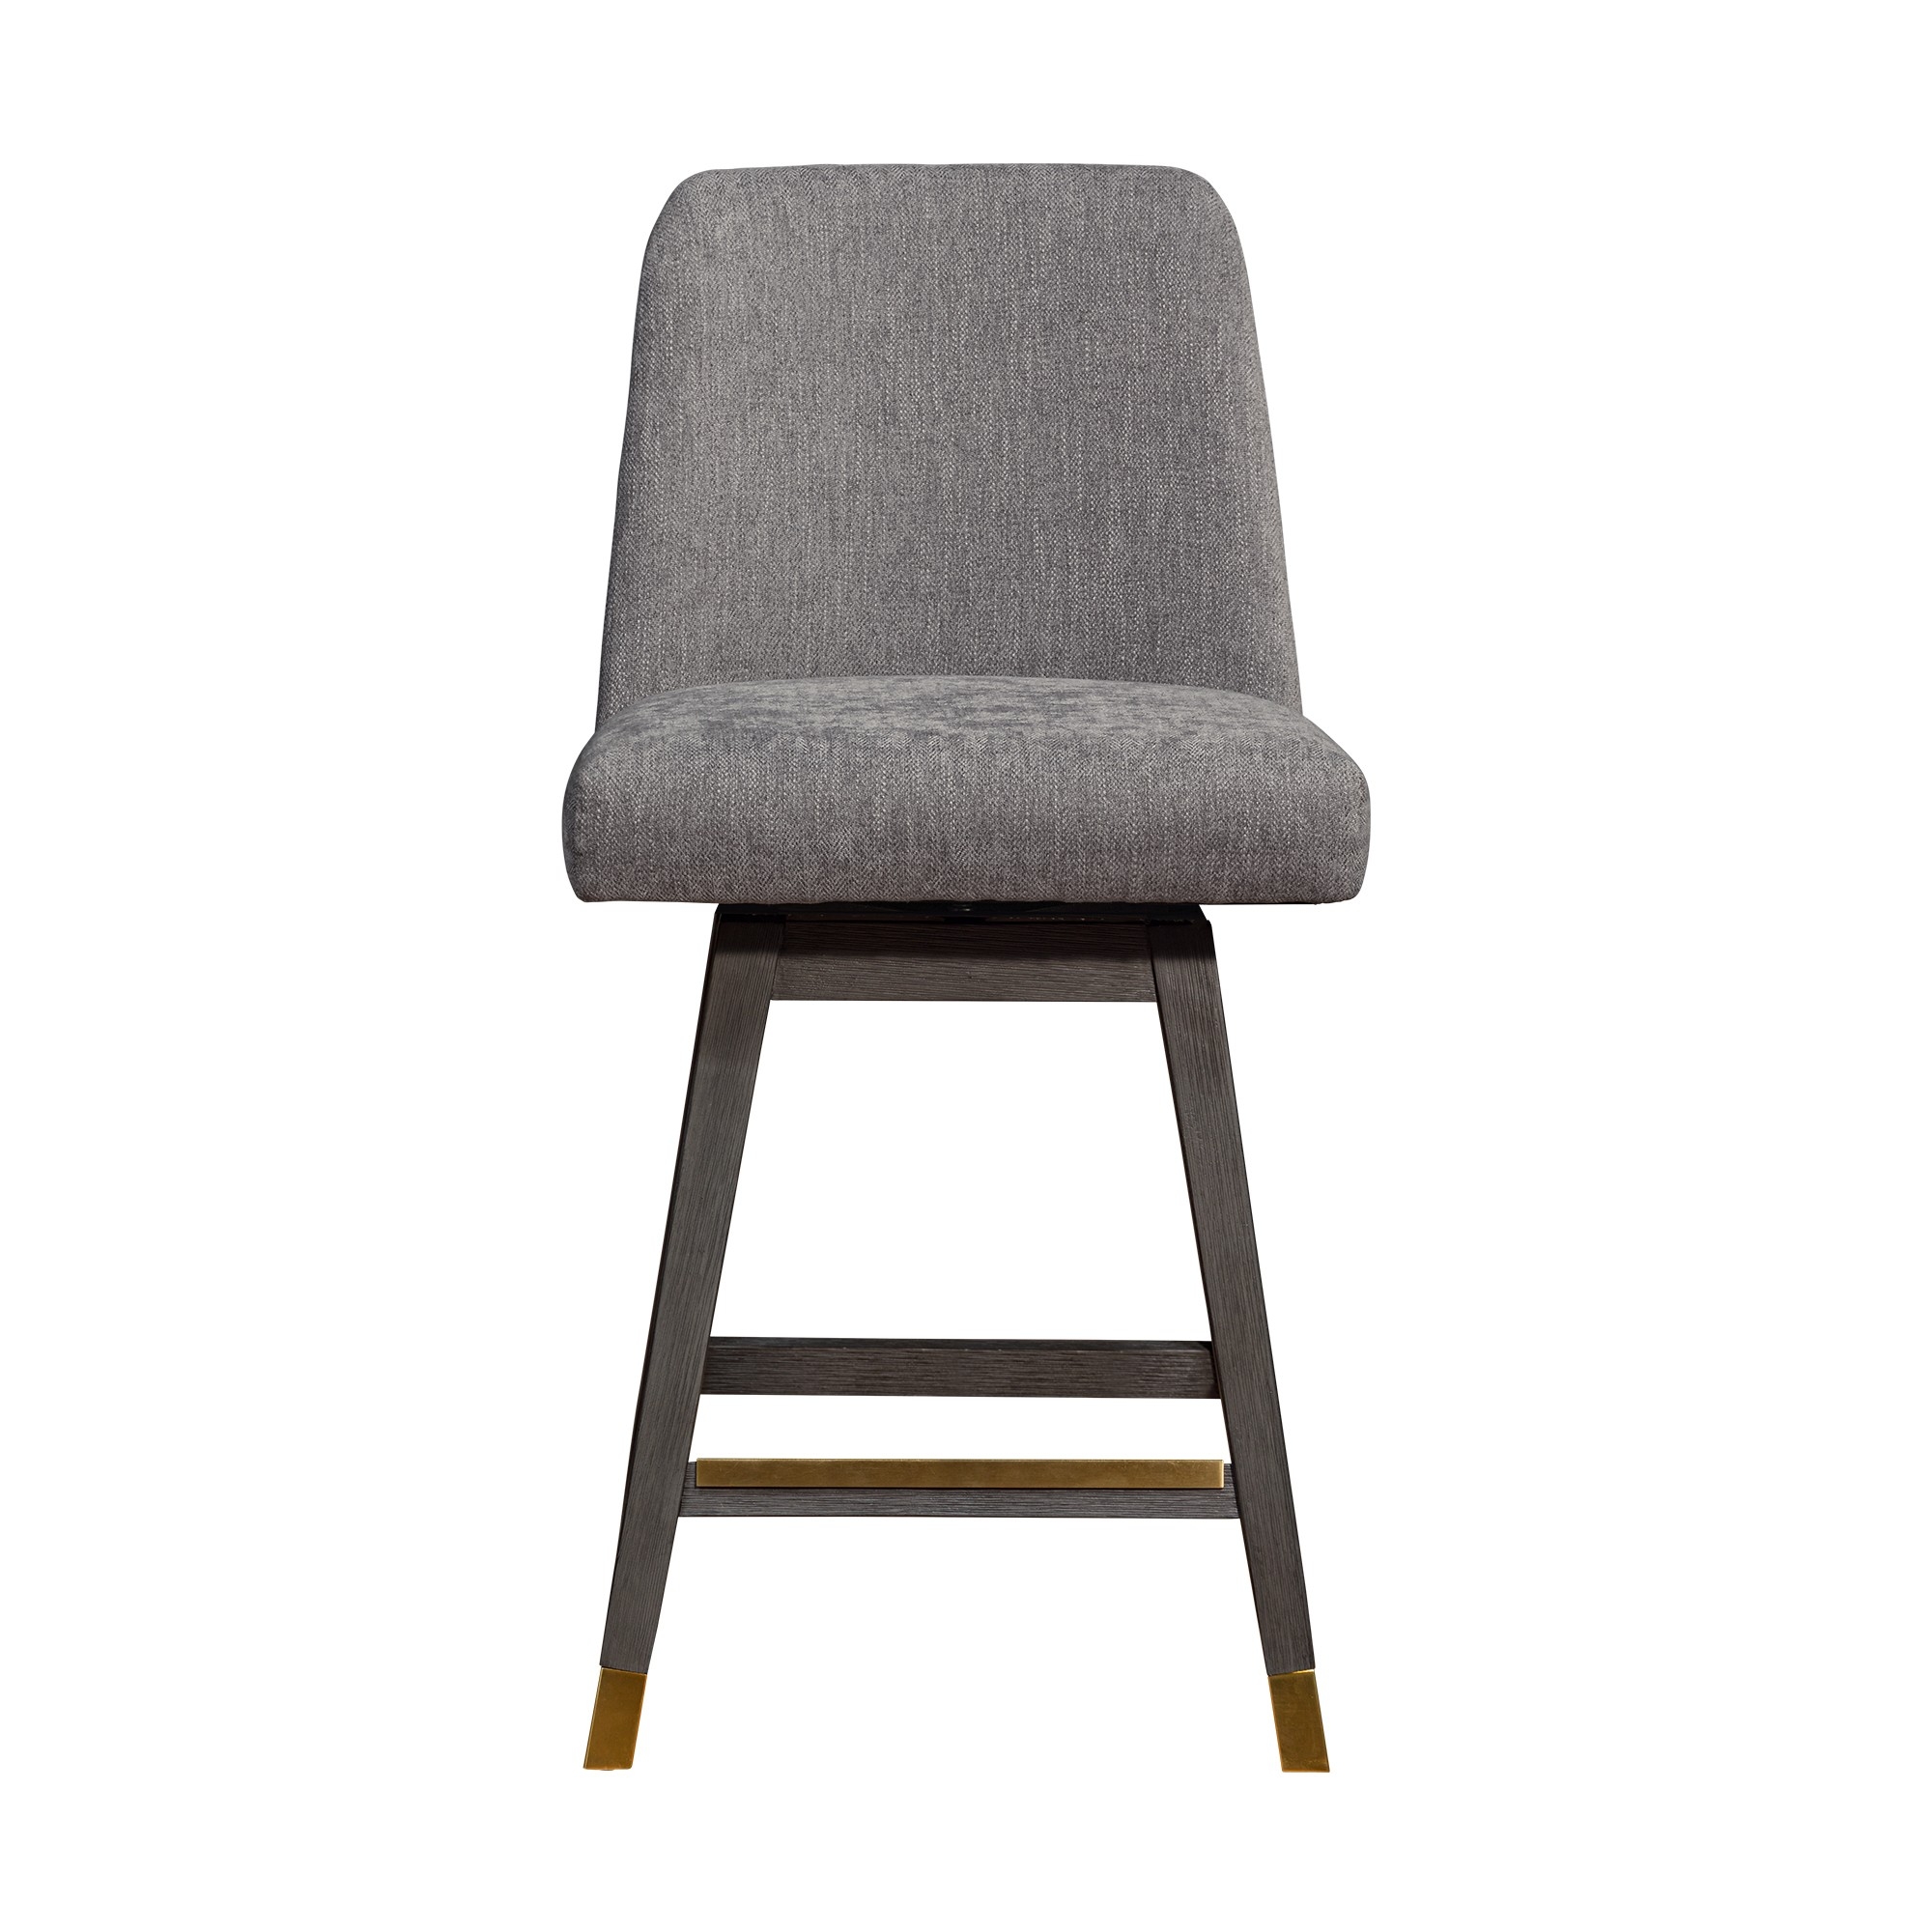 Lara 26 Inch Swivel Counter Stool Chair, Mocha Polyester, Gray Wood Legs- Saltoro Sherpi